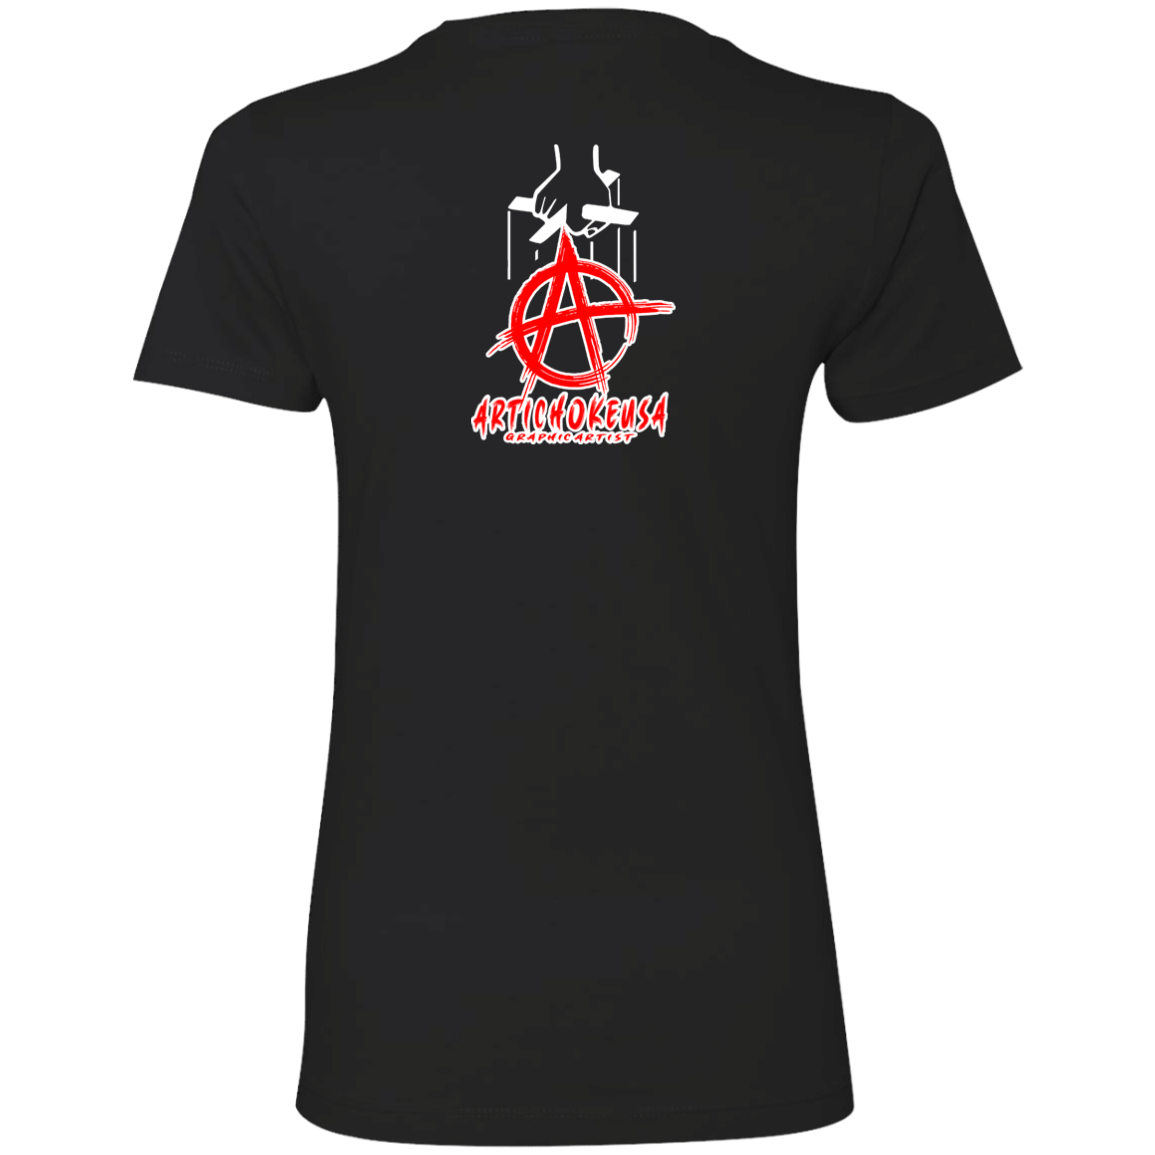 ArtichokeUSA Custom Design. Godfather Simms. NY Giants Superbowl XXI Champions. Fan Art. Ladies' Boyfriend T-Shirt